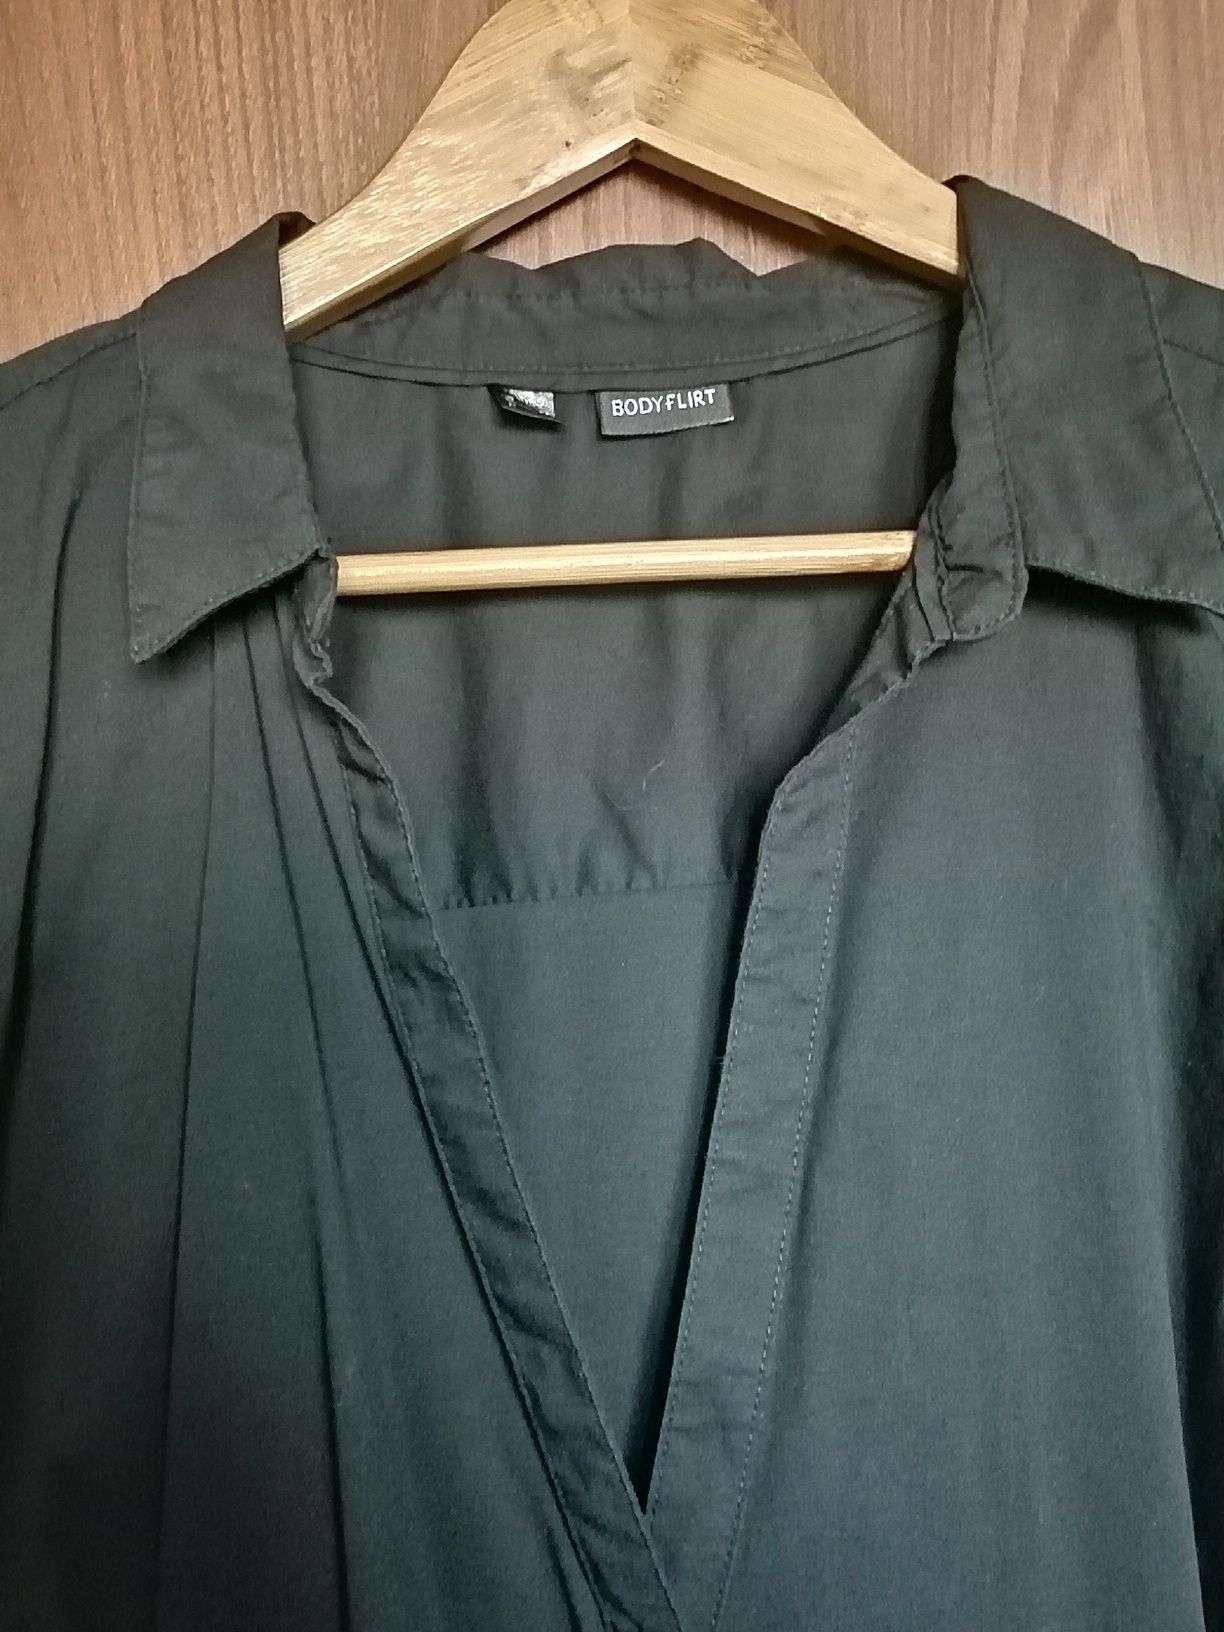 Bluzka taliowana, czarna, 50,bonprix.